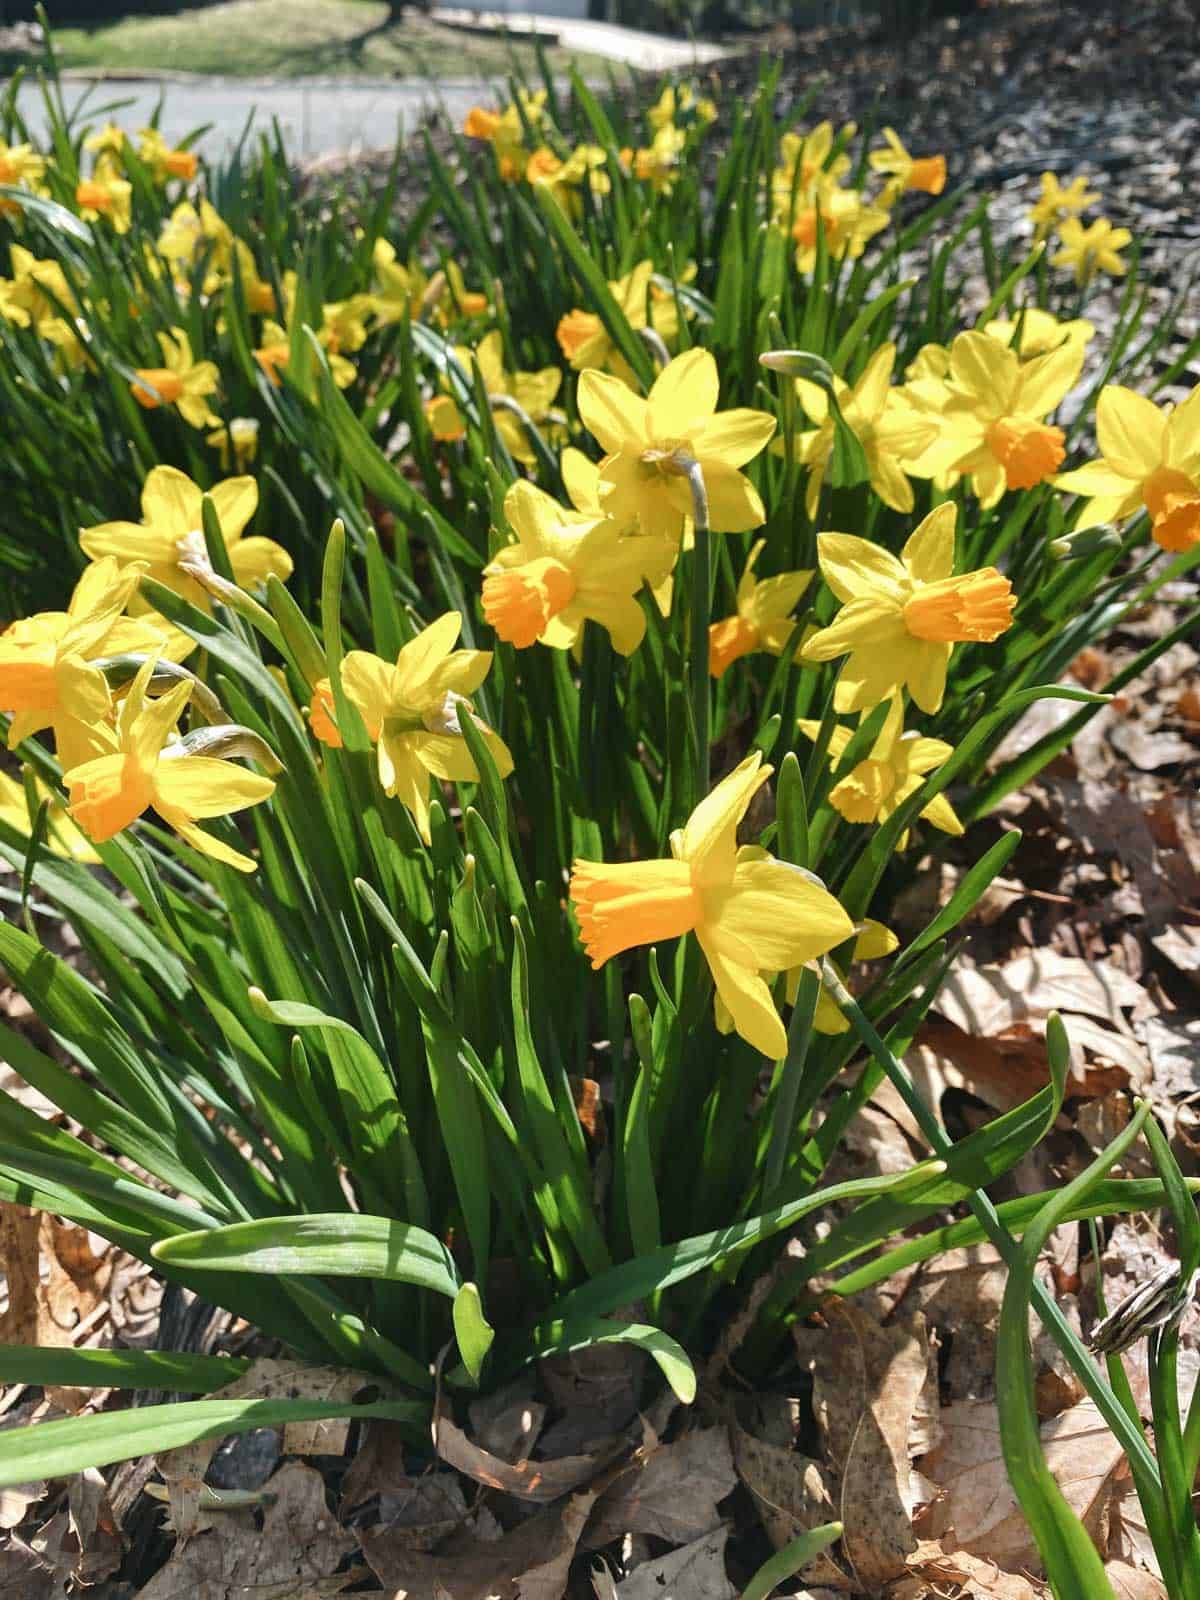 Yellow daffodils growing in a garden.